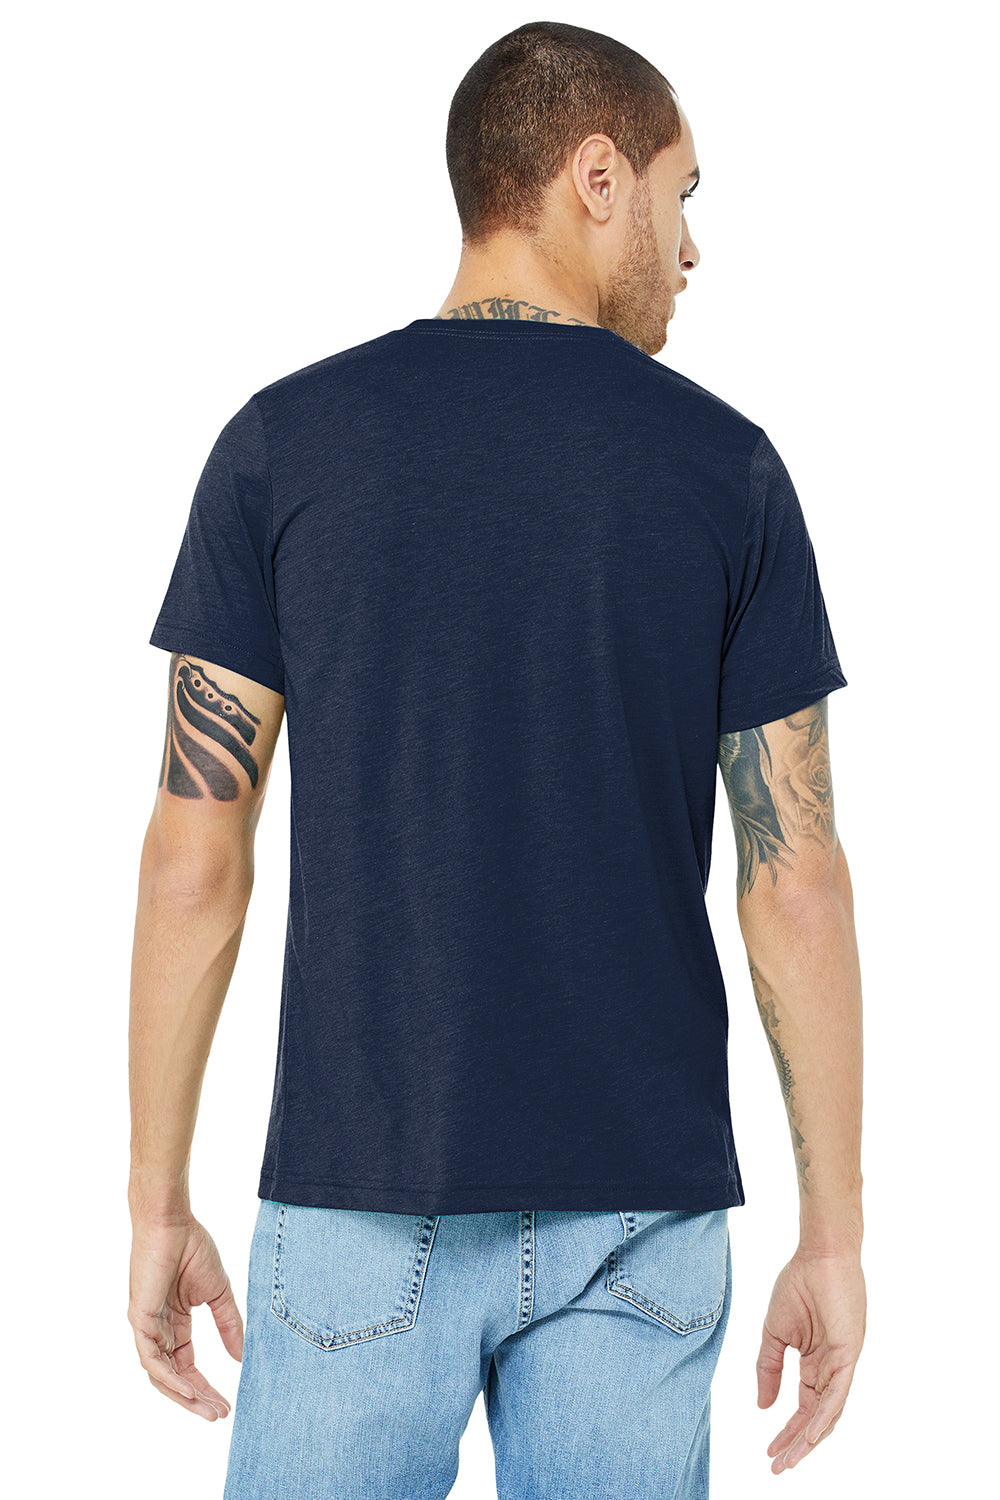 Bella + Canvas BC3413/3413C/3413 Mens Short Sleeve Crewneck T-Shirt Solid Navy Blue Model Back